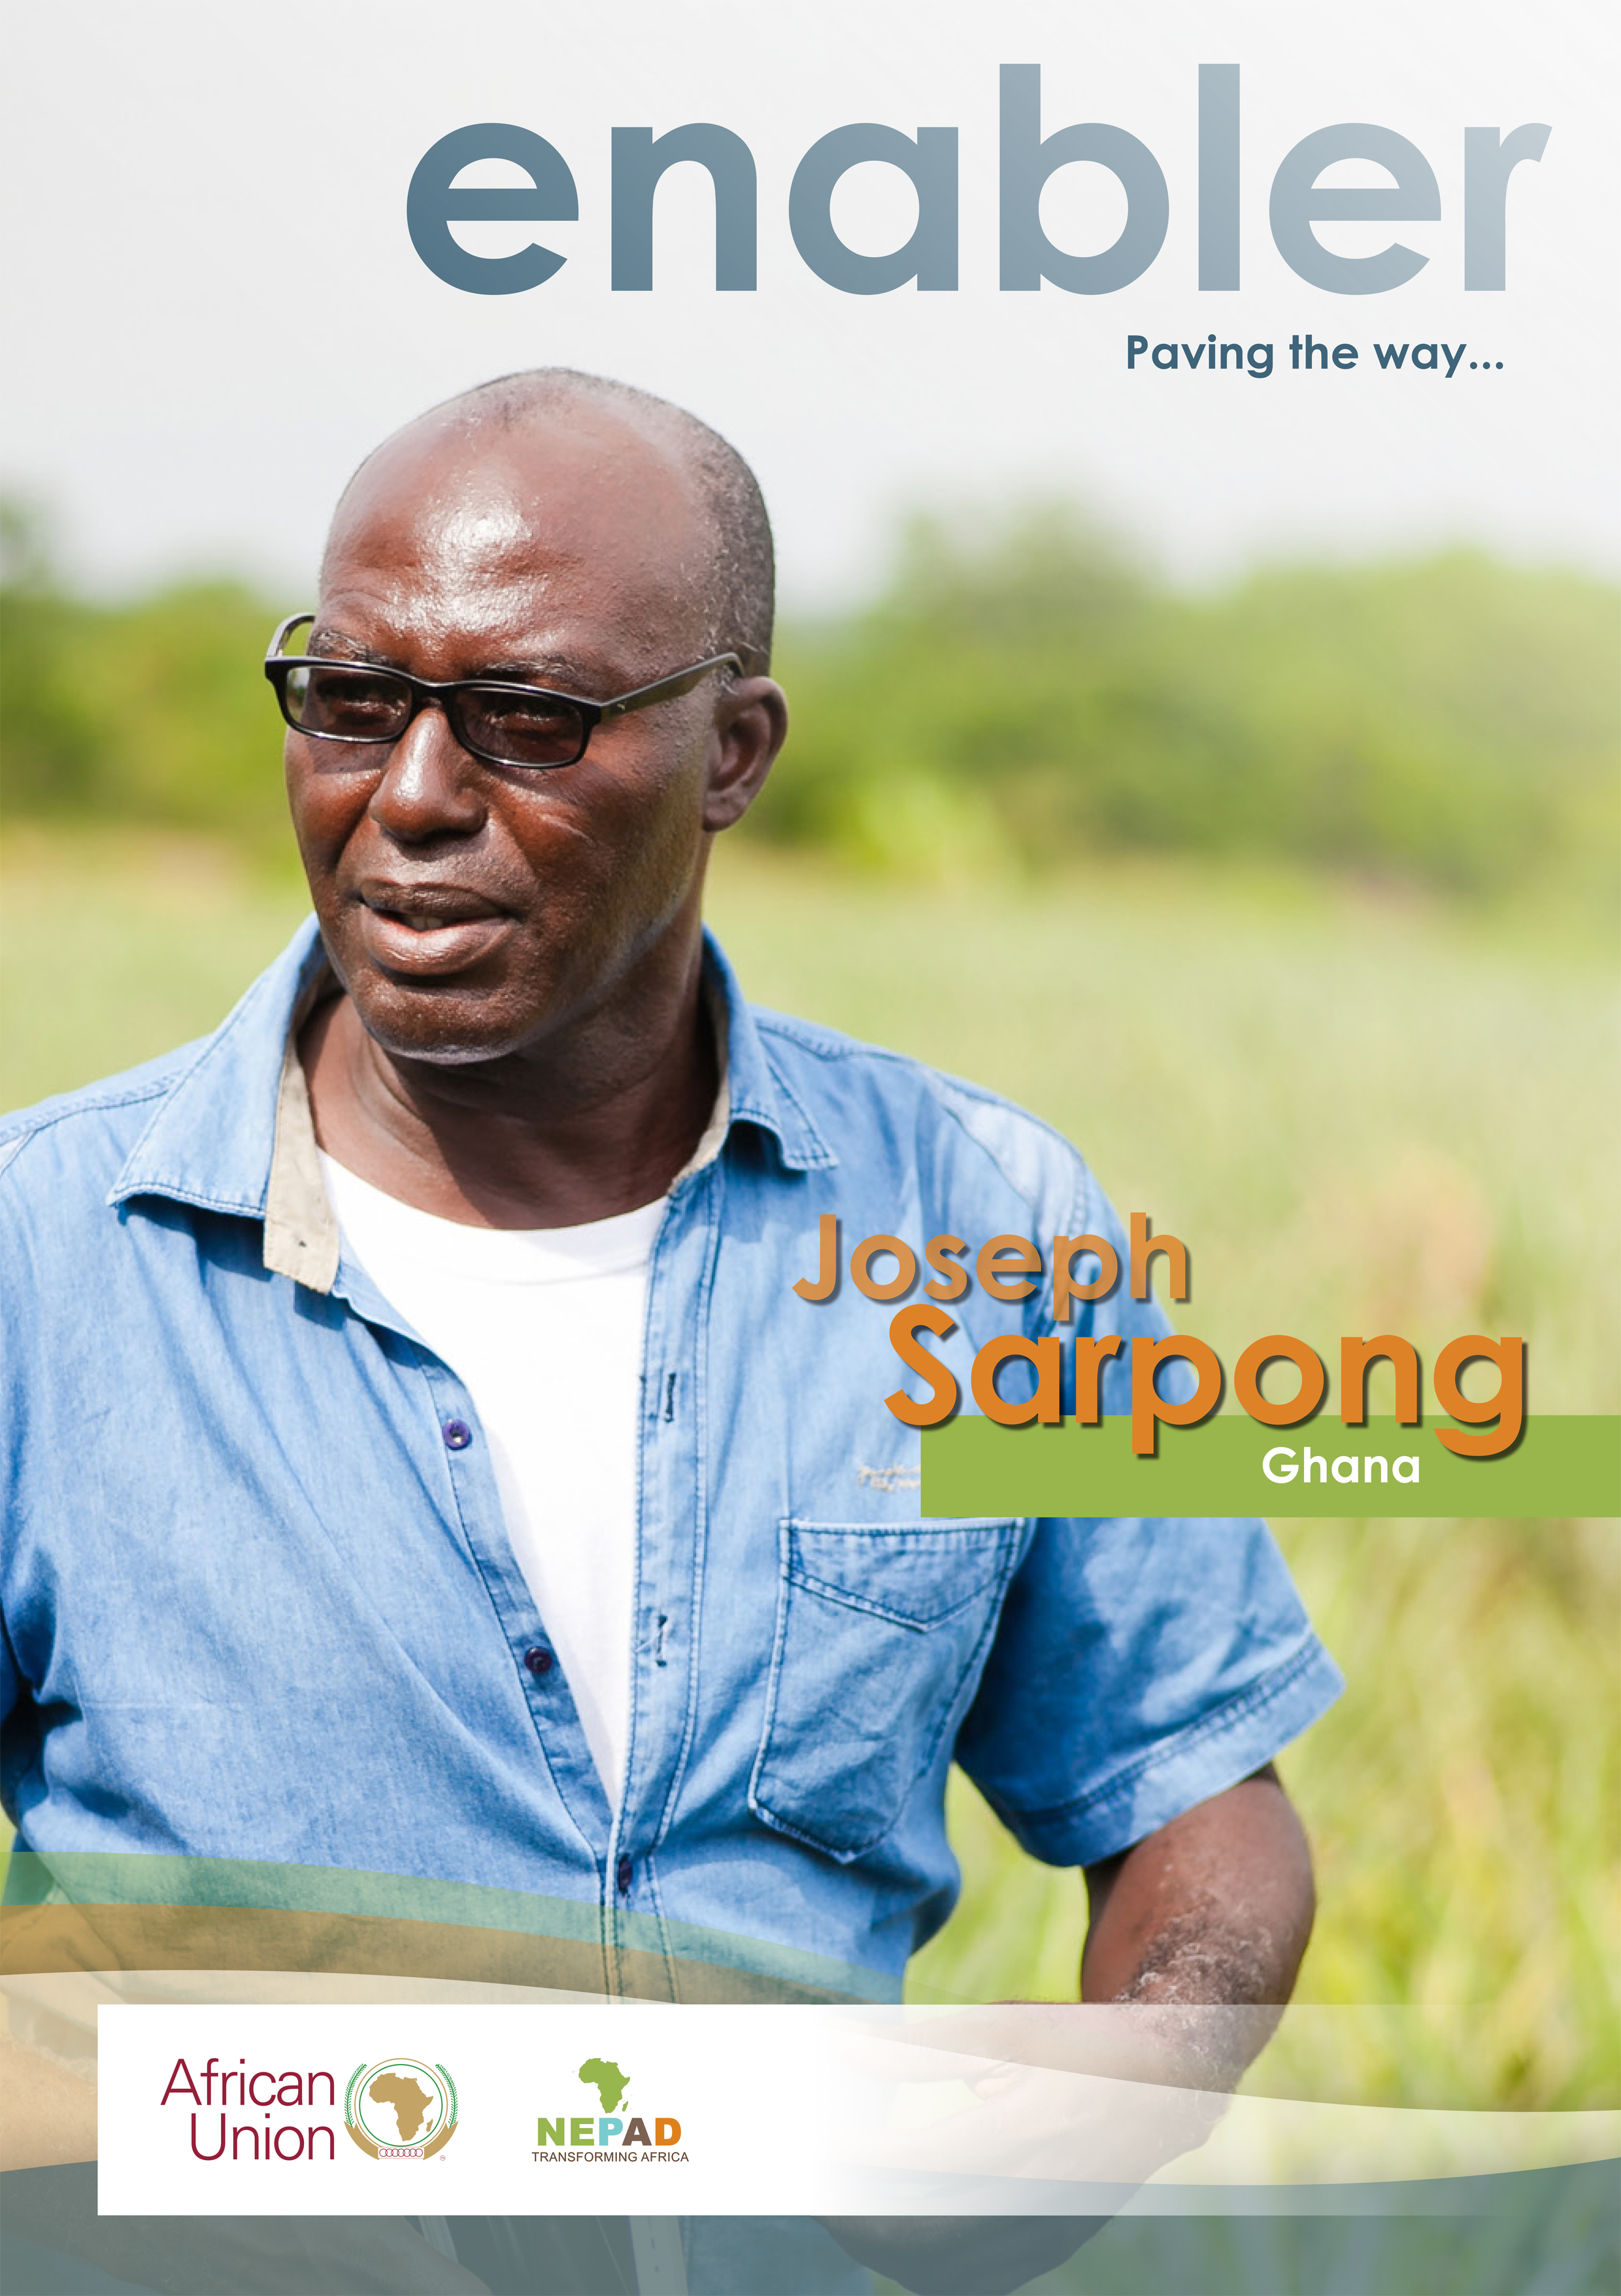 Joseph Sarpong, Ghana